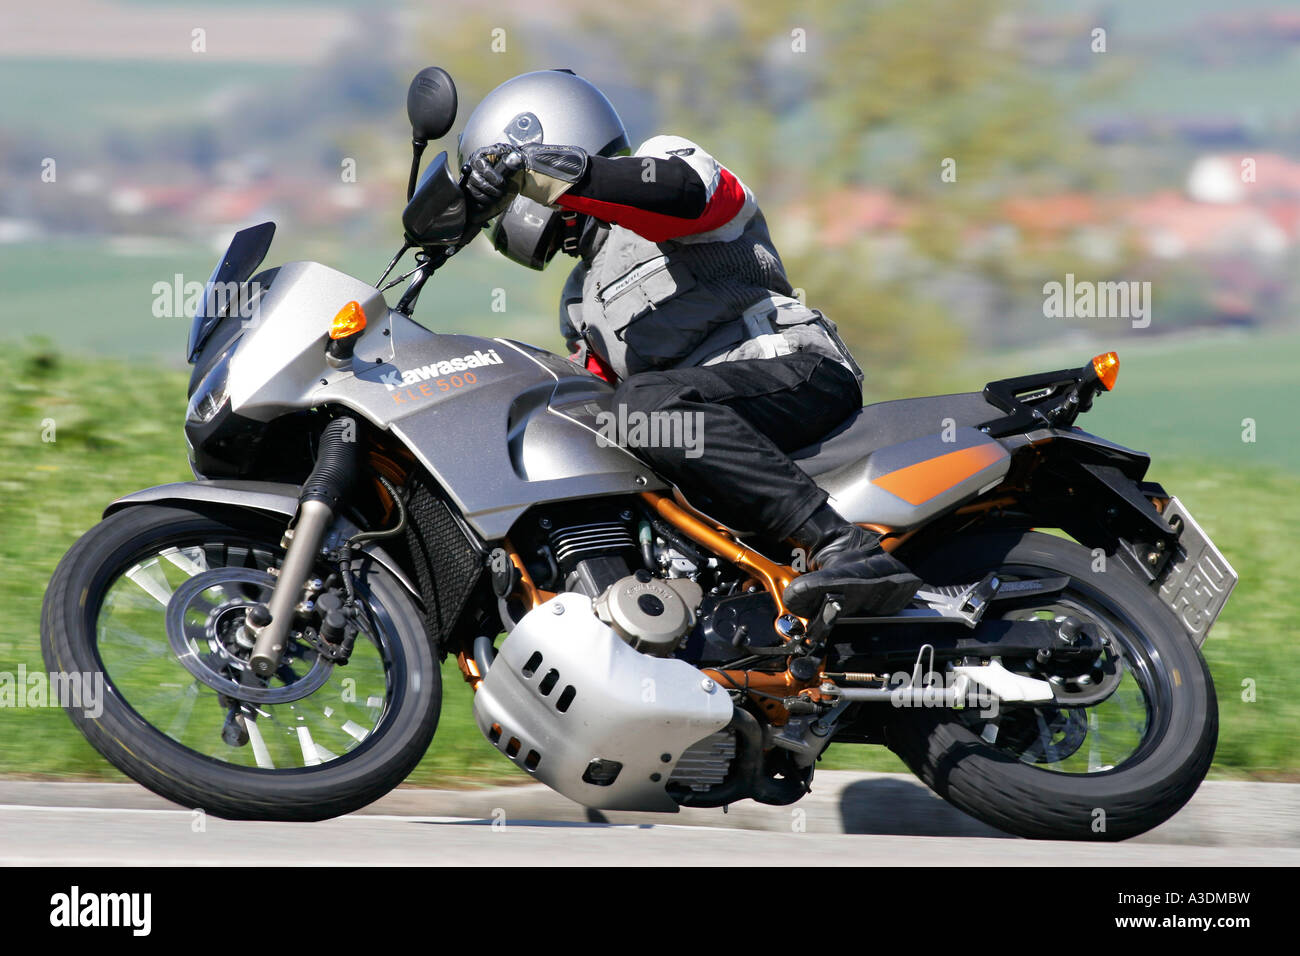 Kawasaki KLE 500 motorcycle Stock Photo